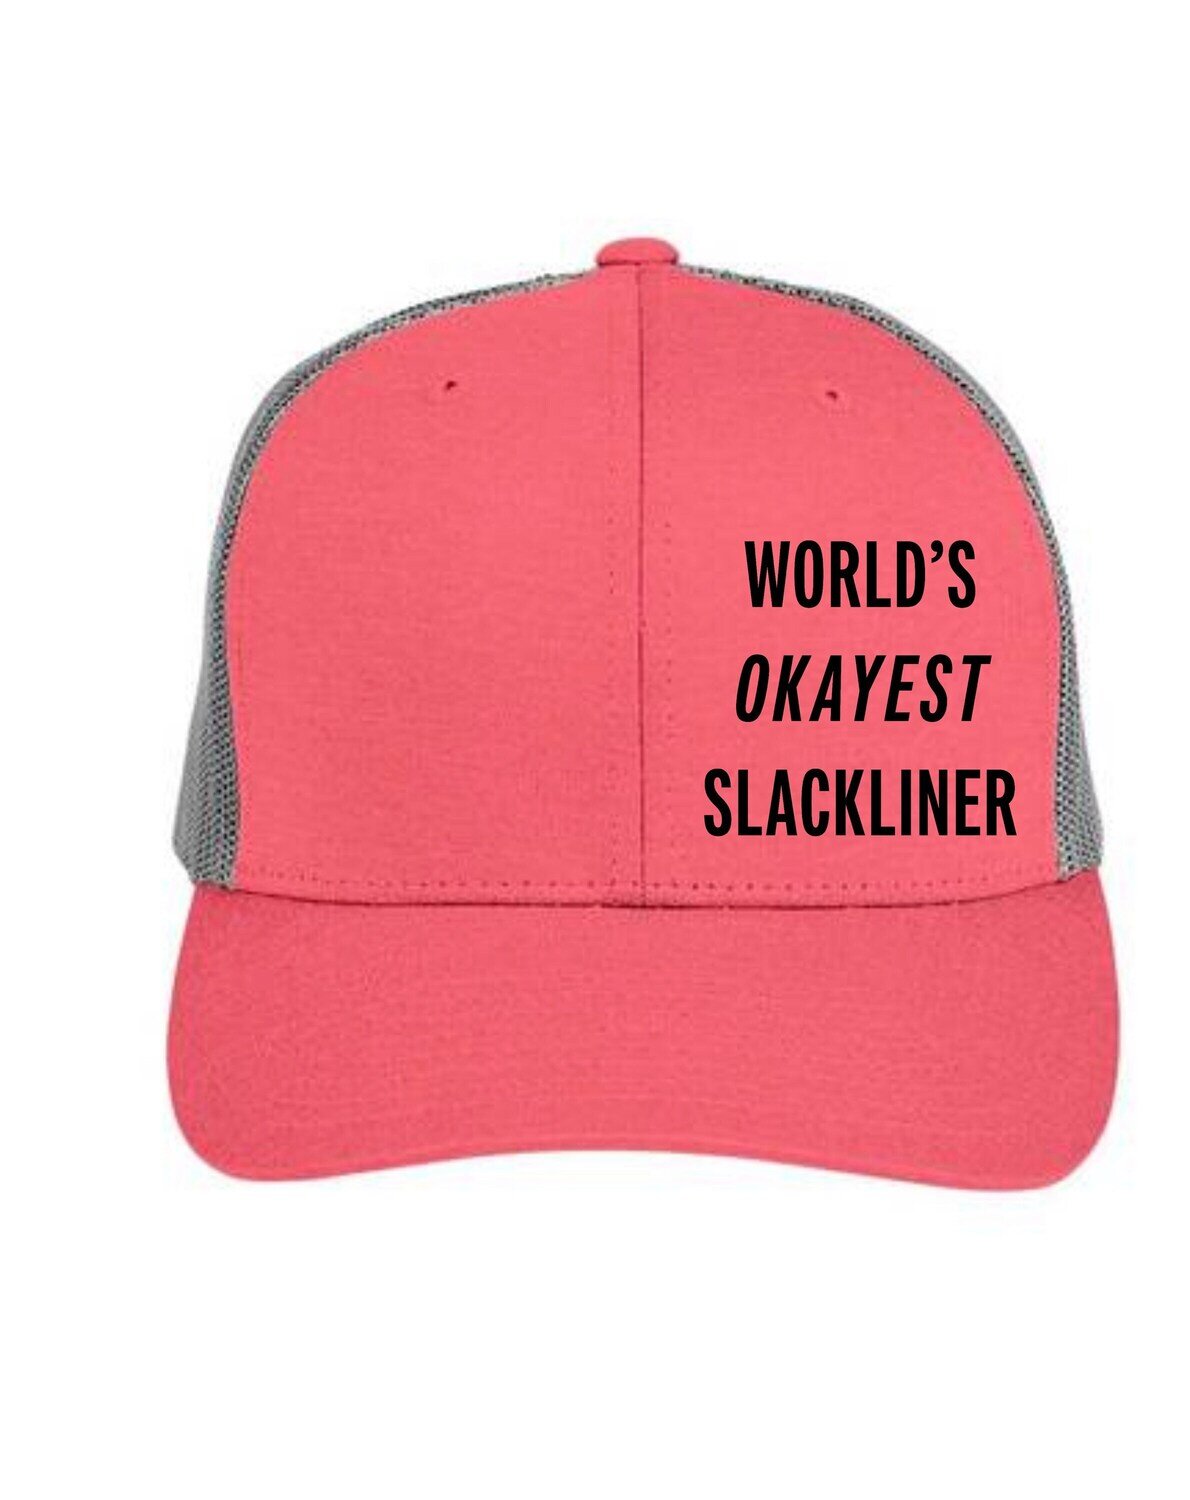 How Not To Highline Official Hat! Worlds Okayest Slackliner , Ryan Jenks, Super Good Enough!